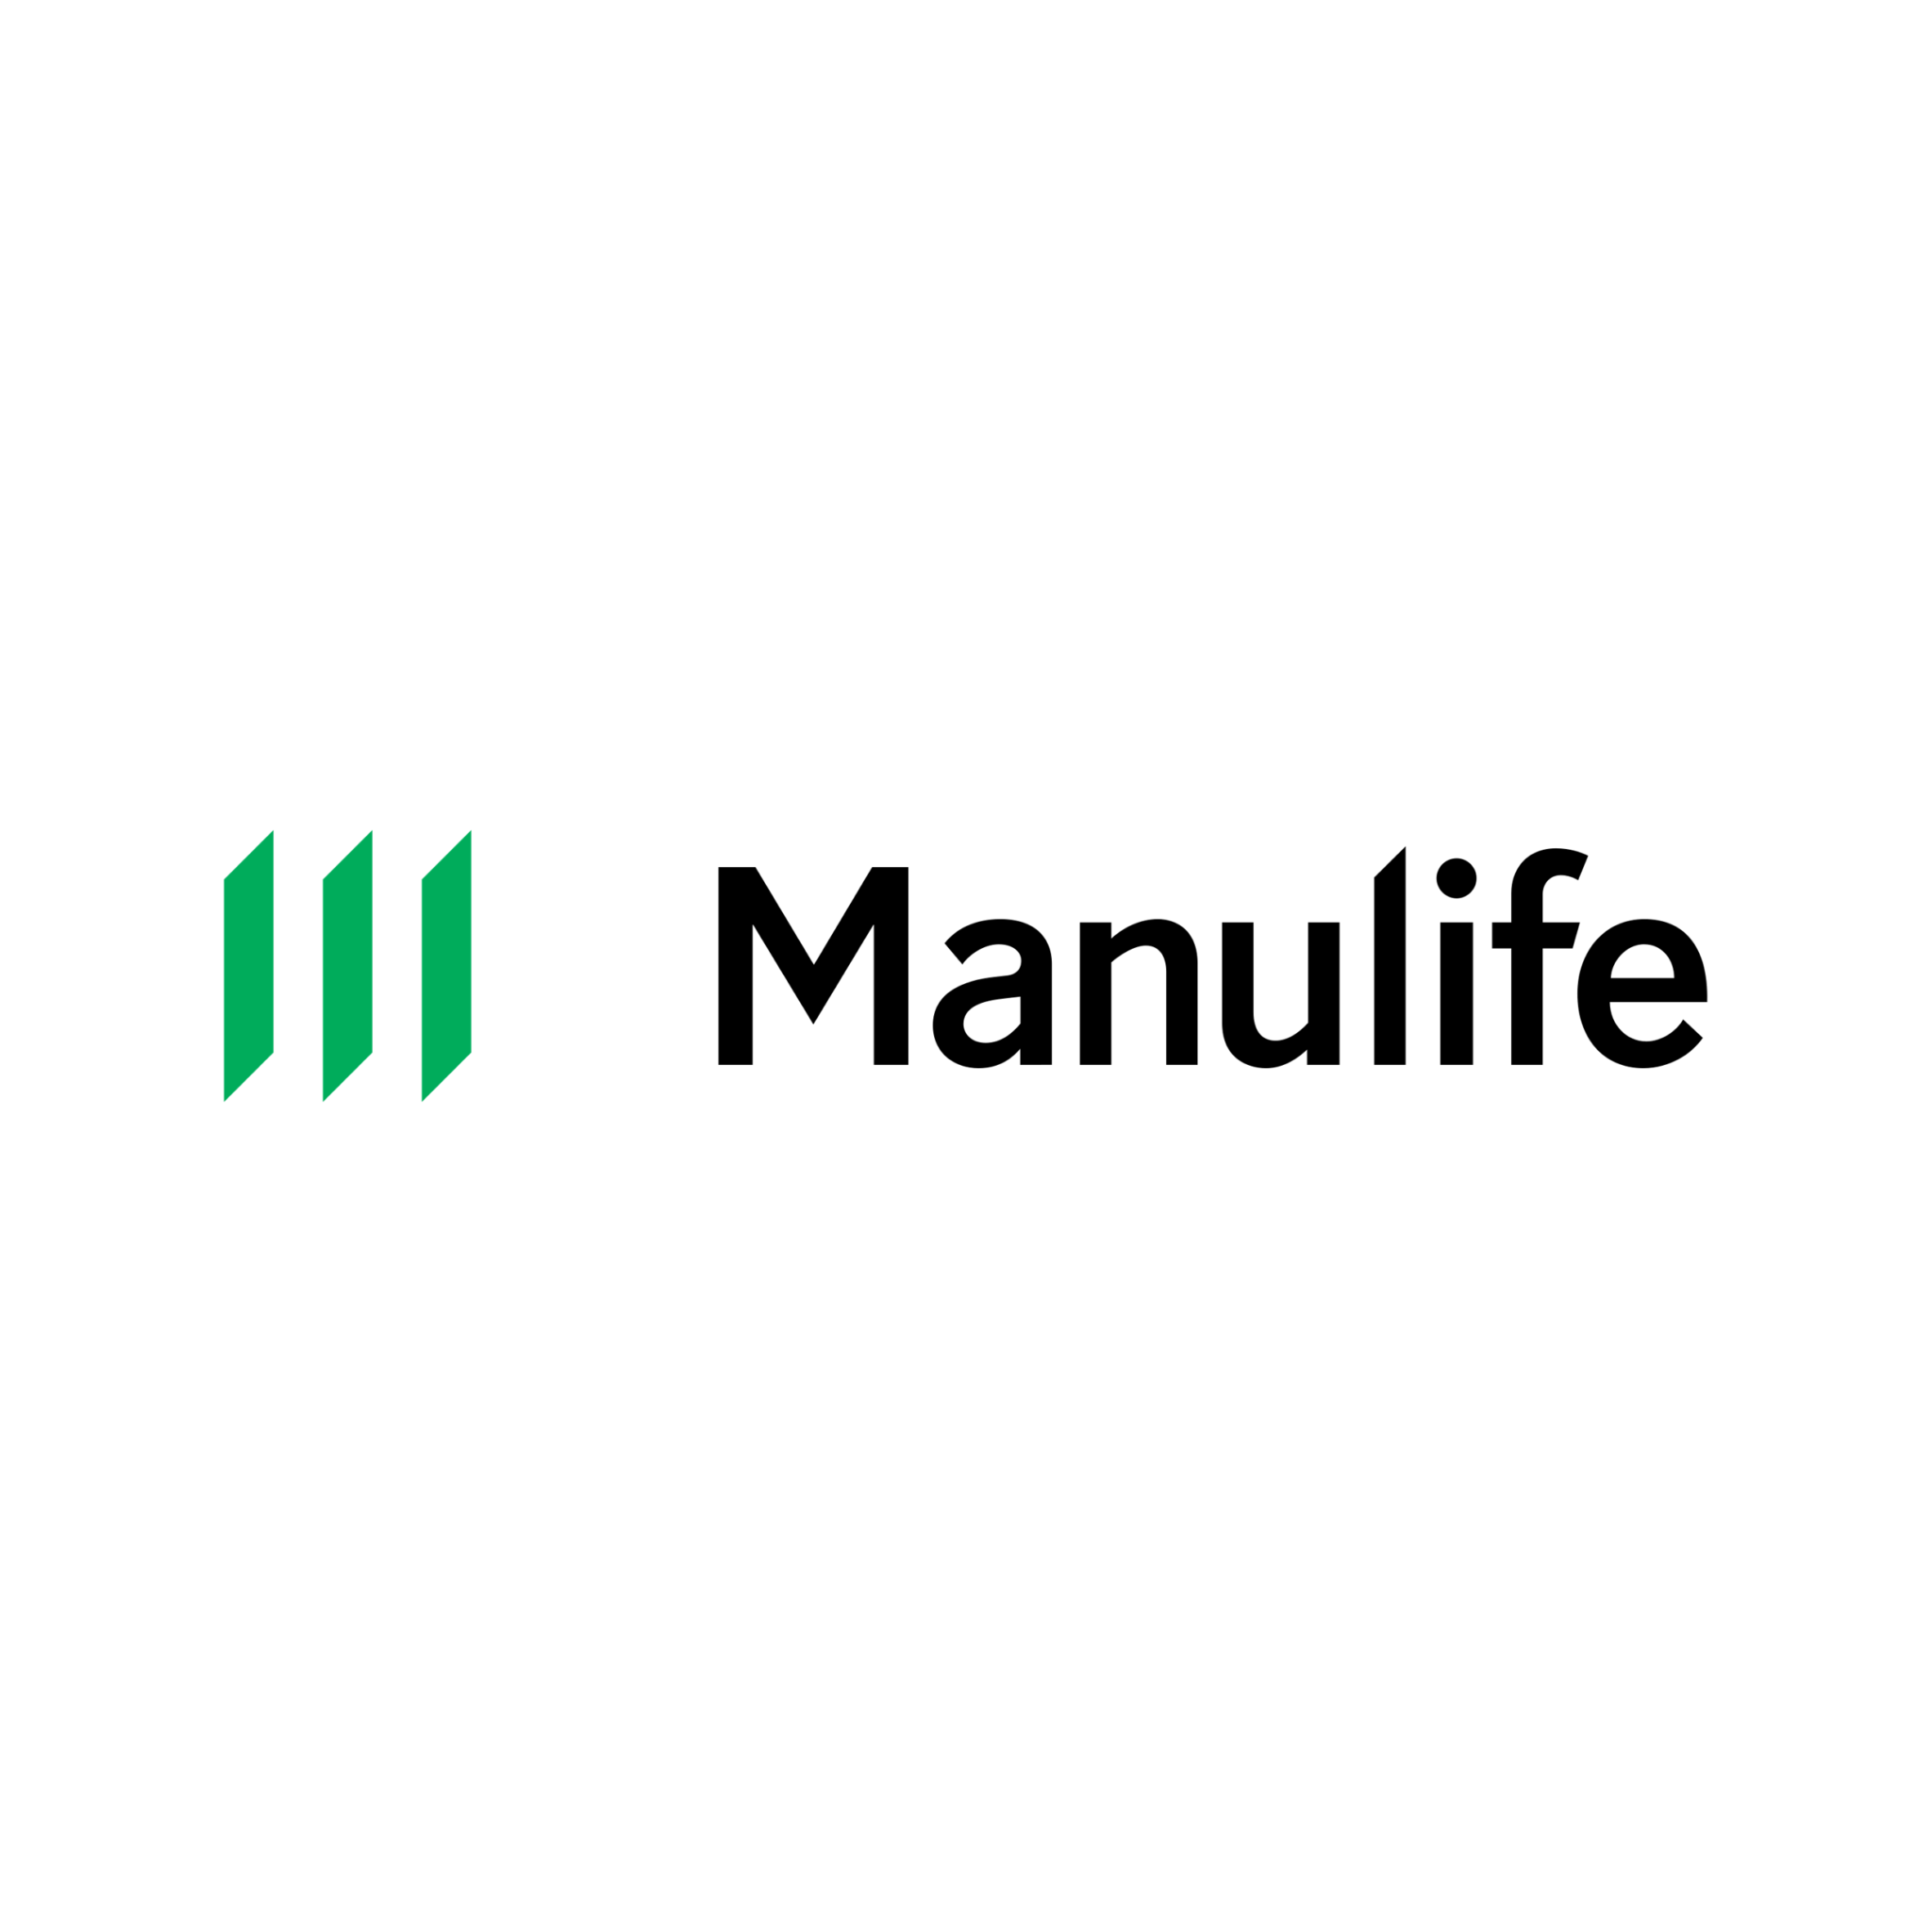 Manulife logo 2021